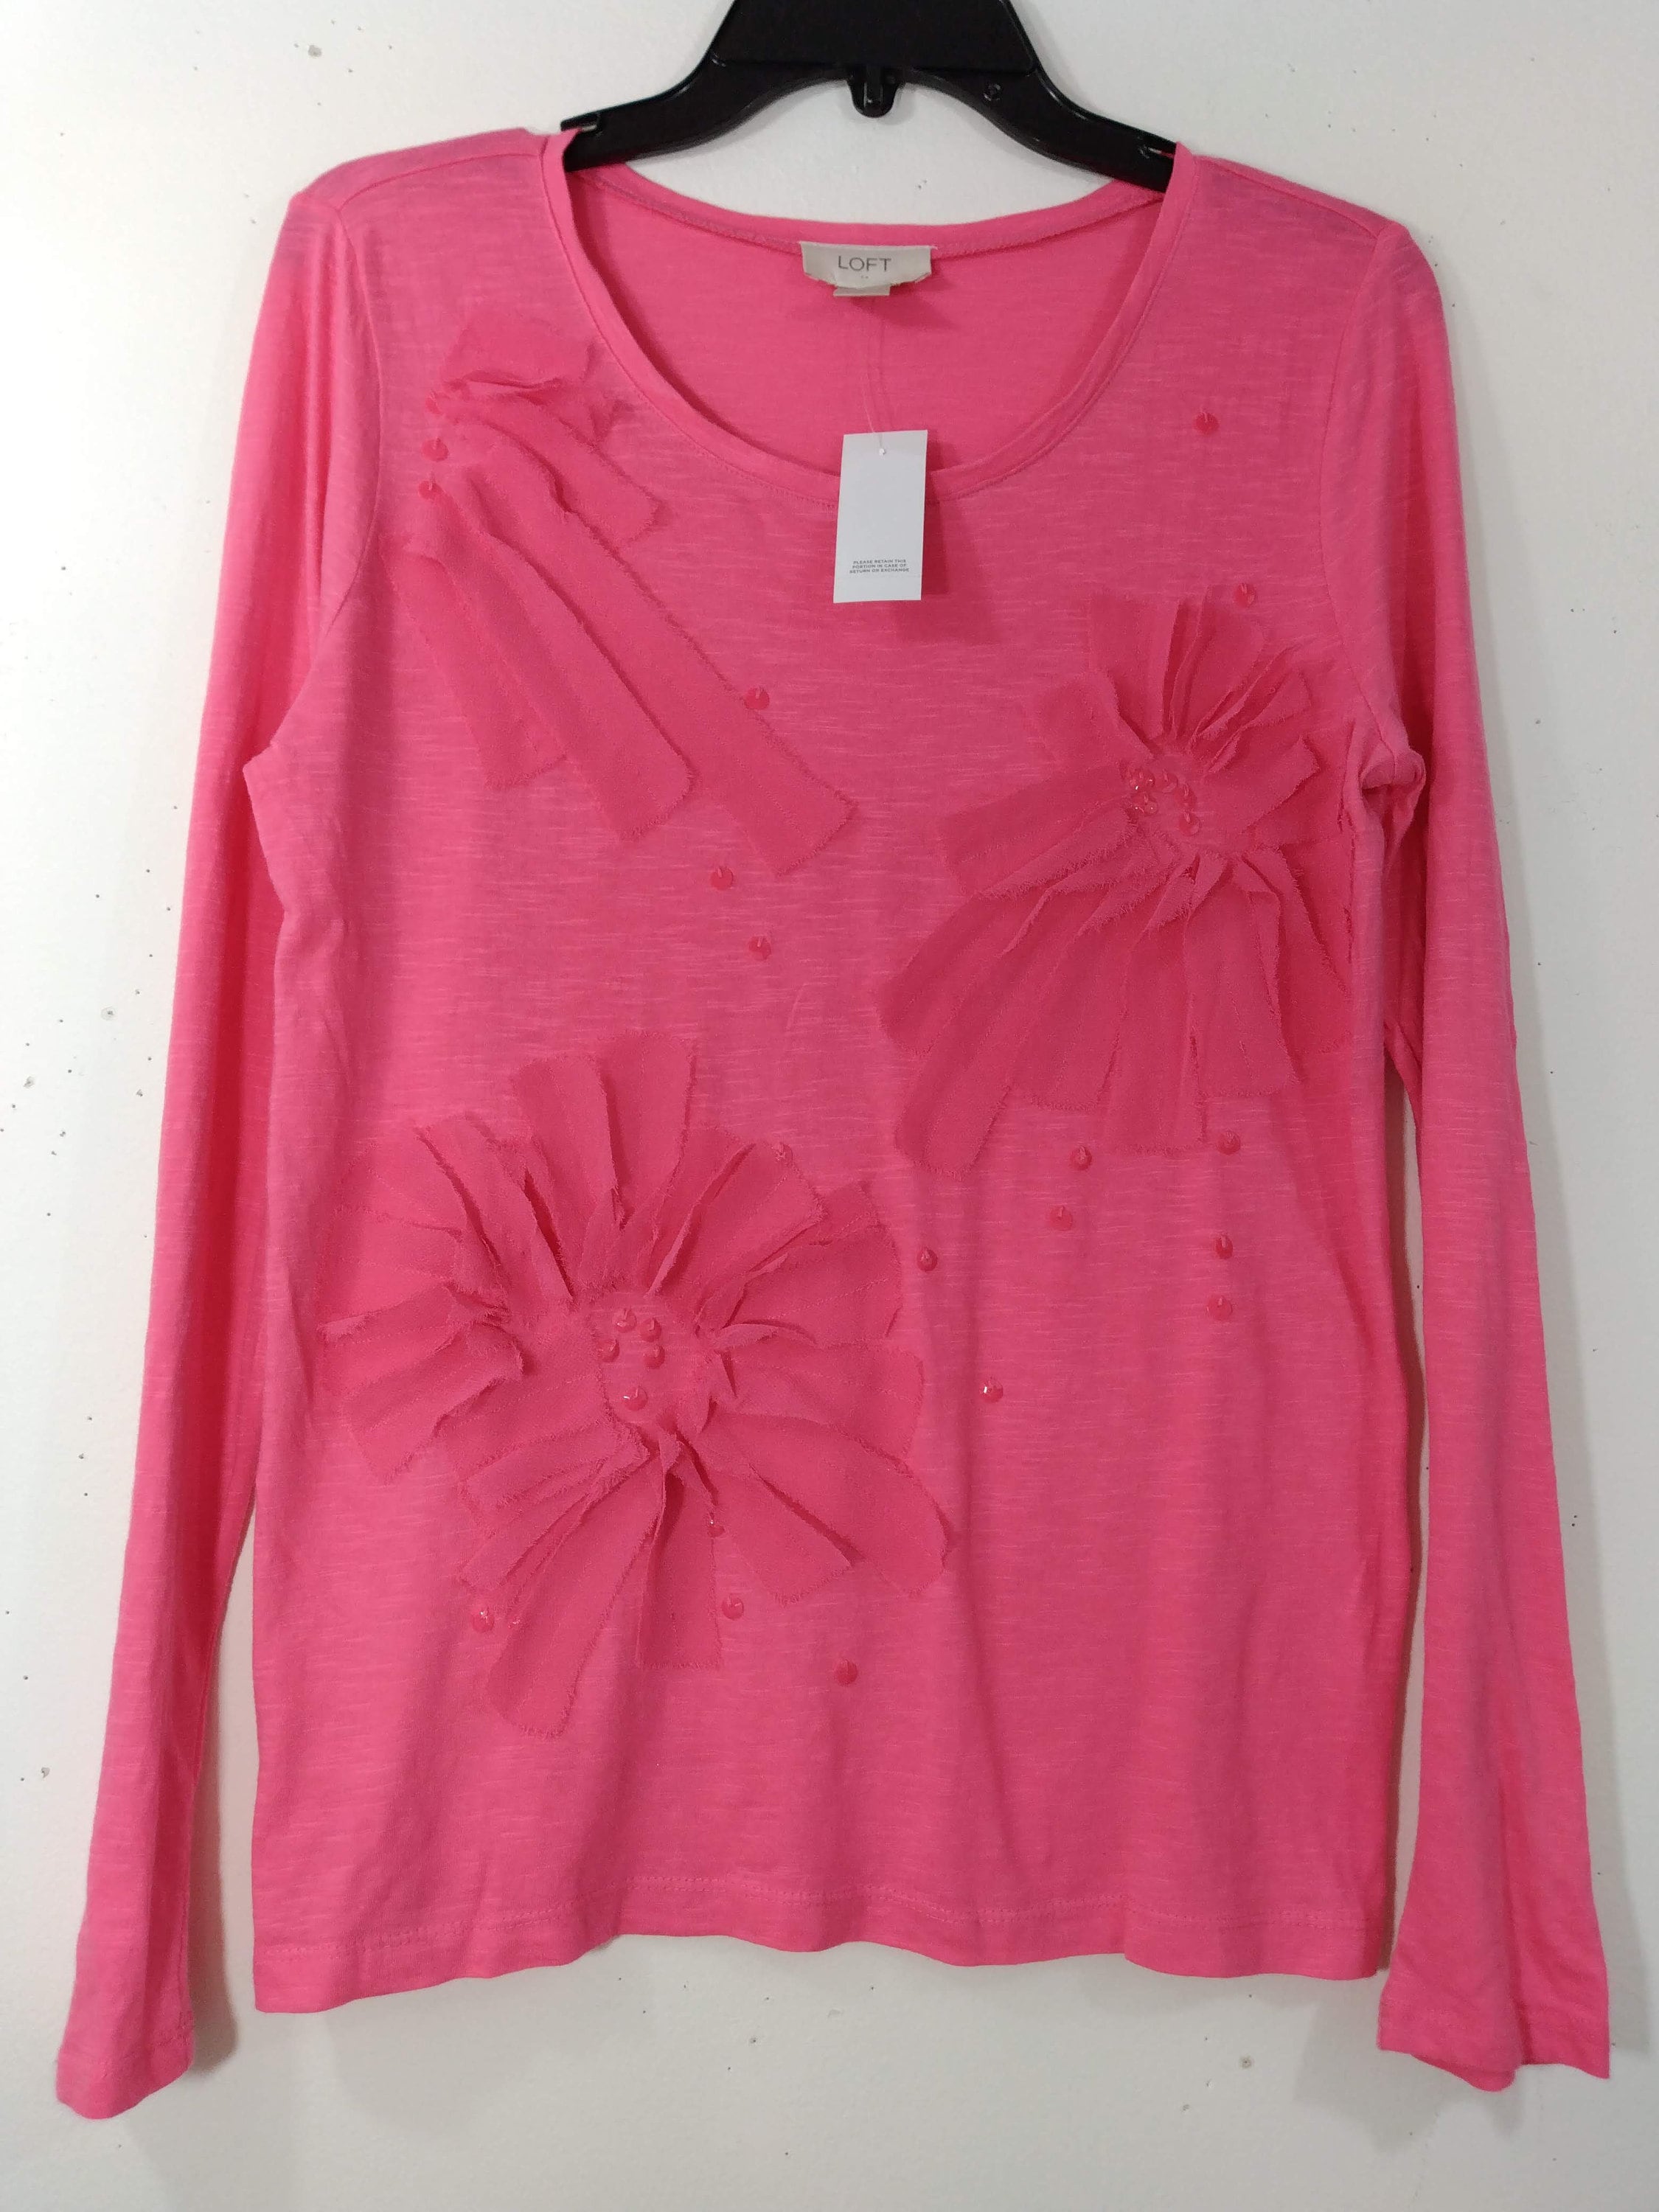 Women's Pink T-shirt 100% Cotton Long Sleeve 3-D Arty Abstract